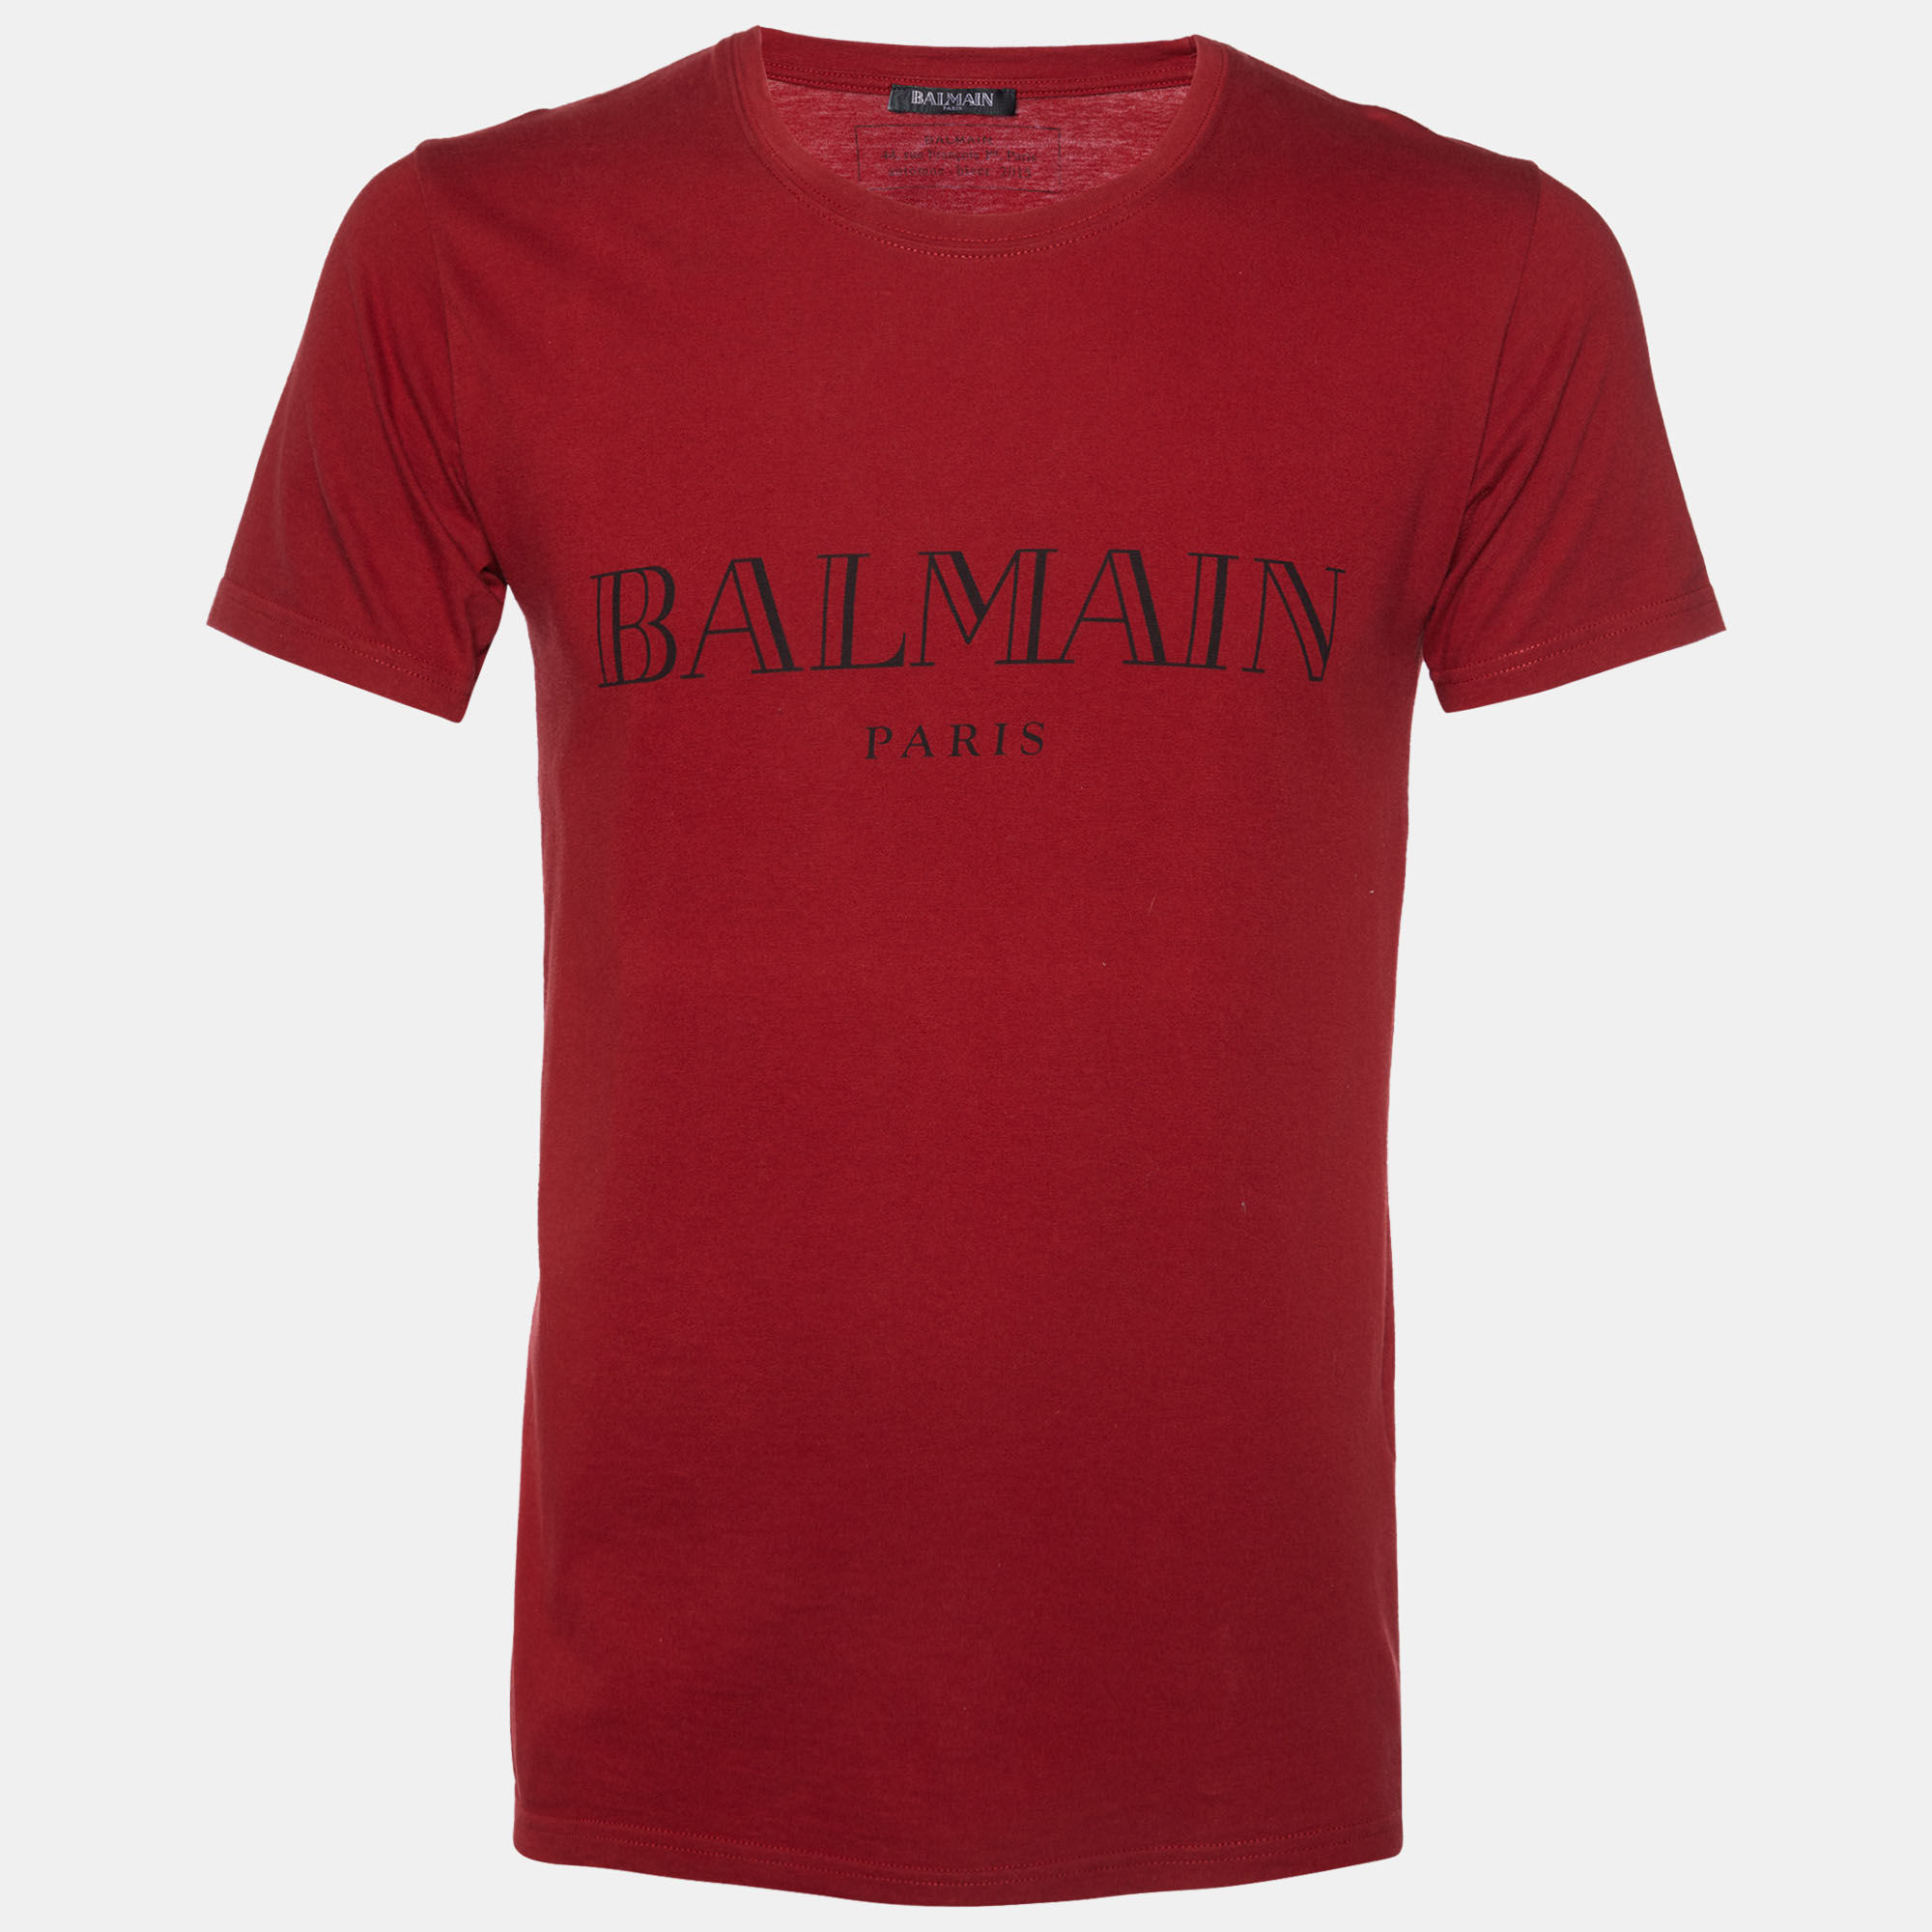 Balmain red logo print cotton crew neck t-shirt xs